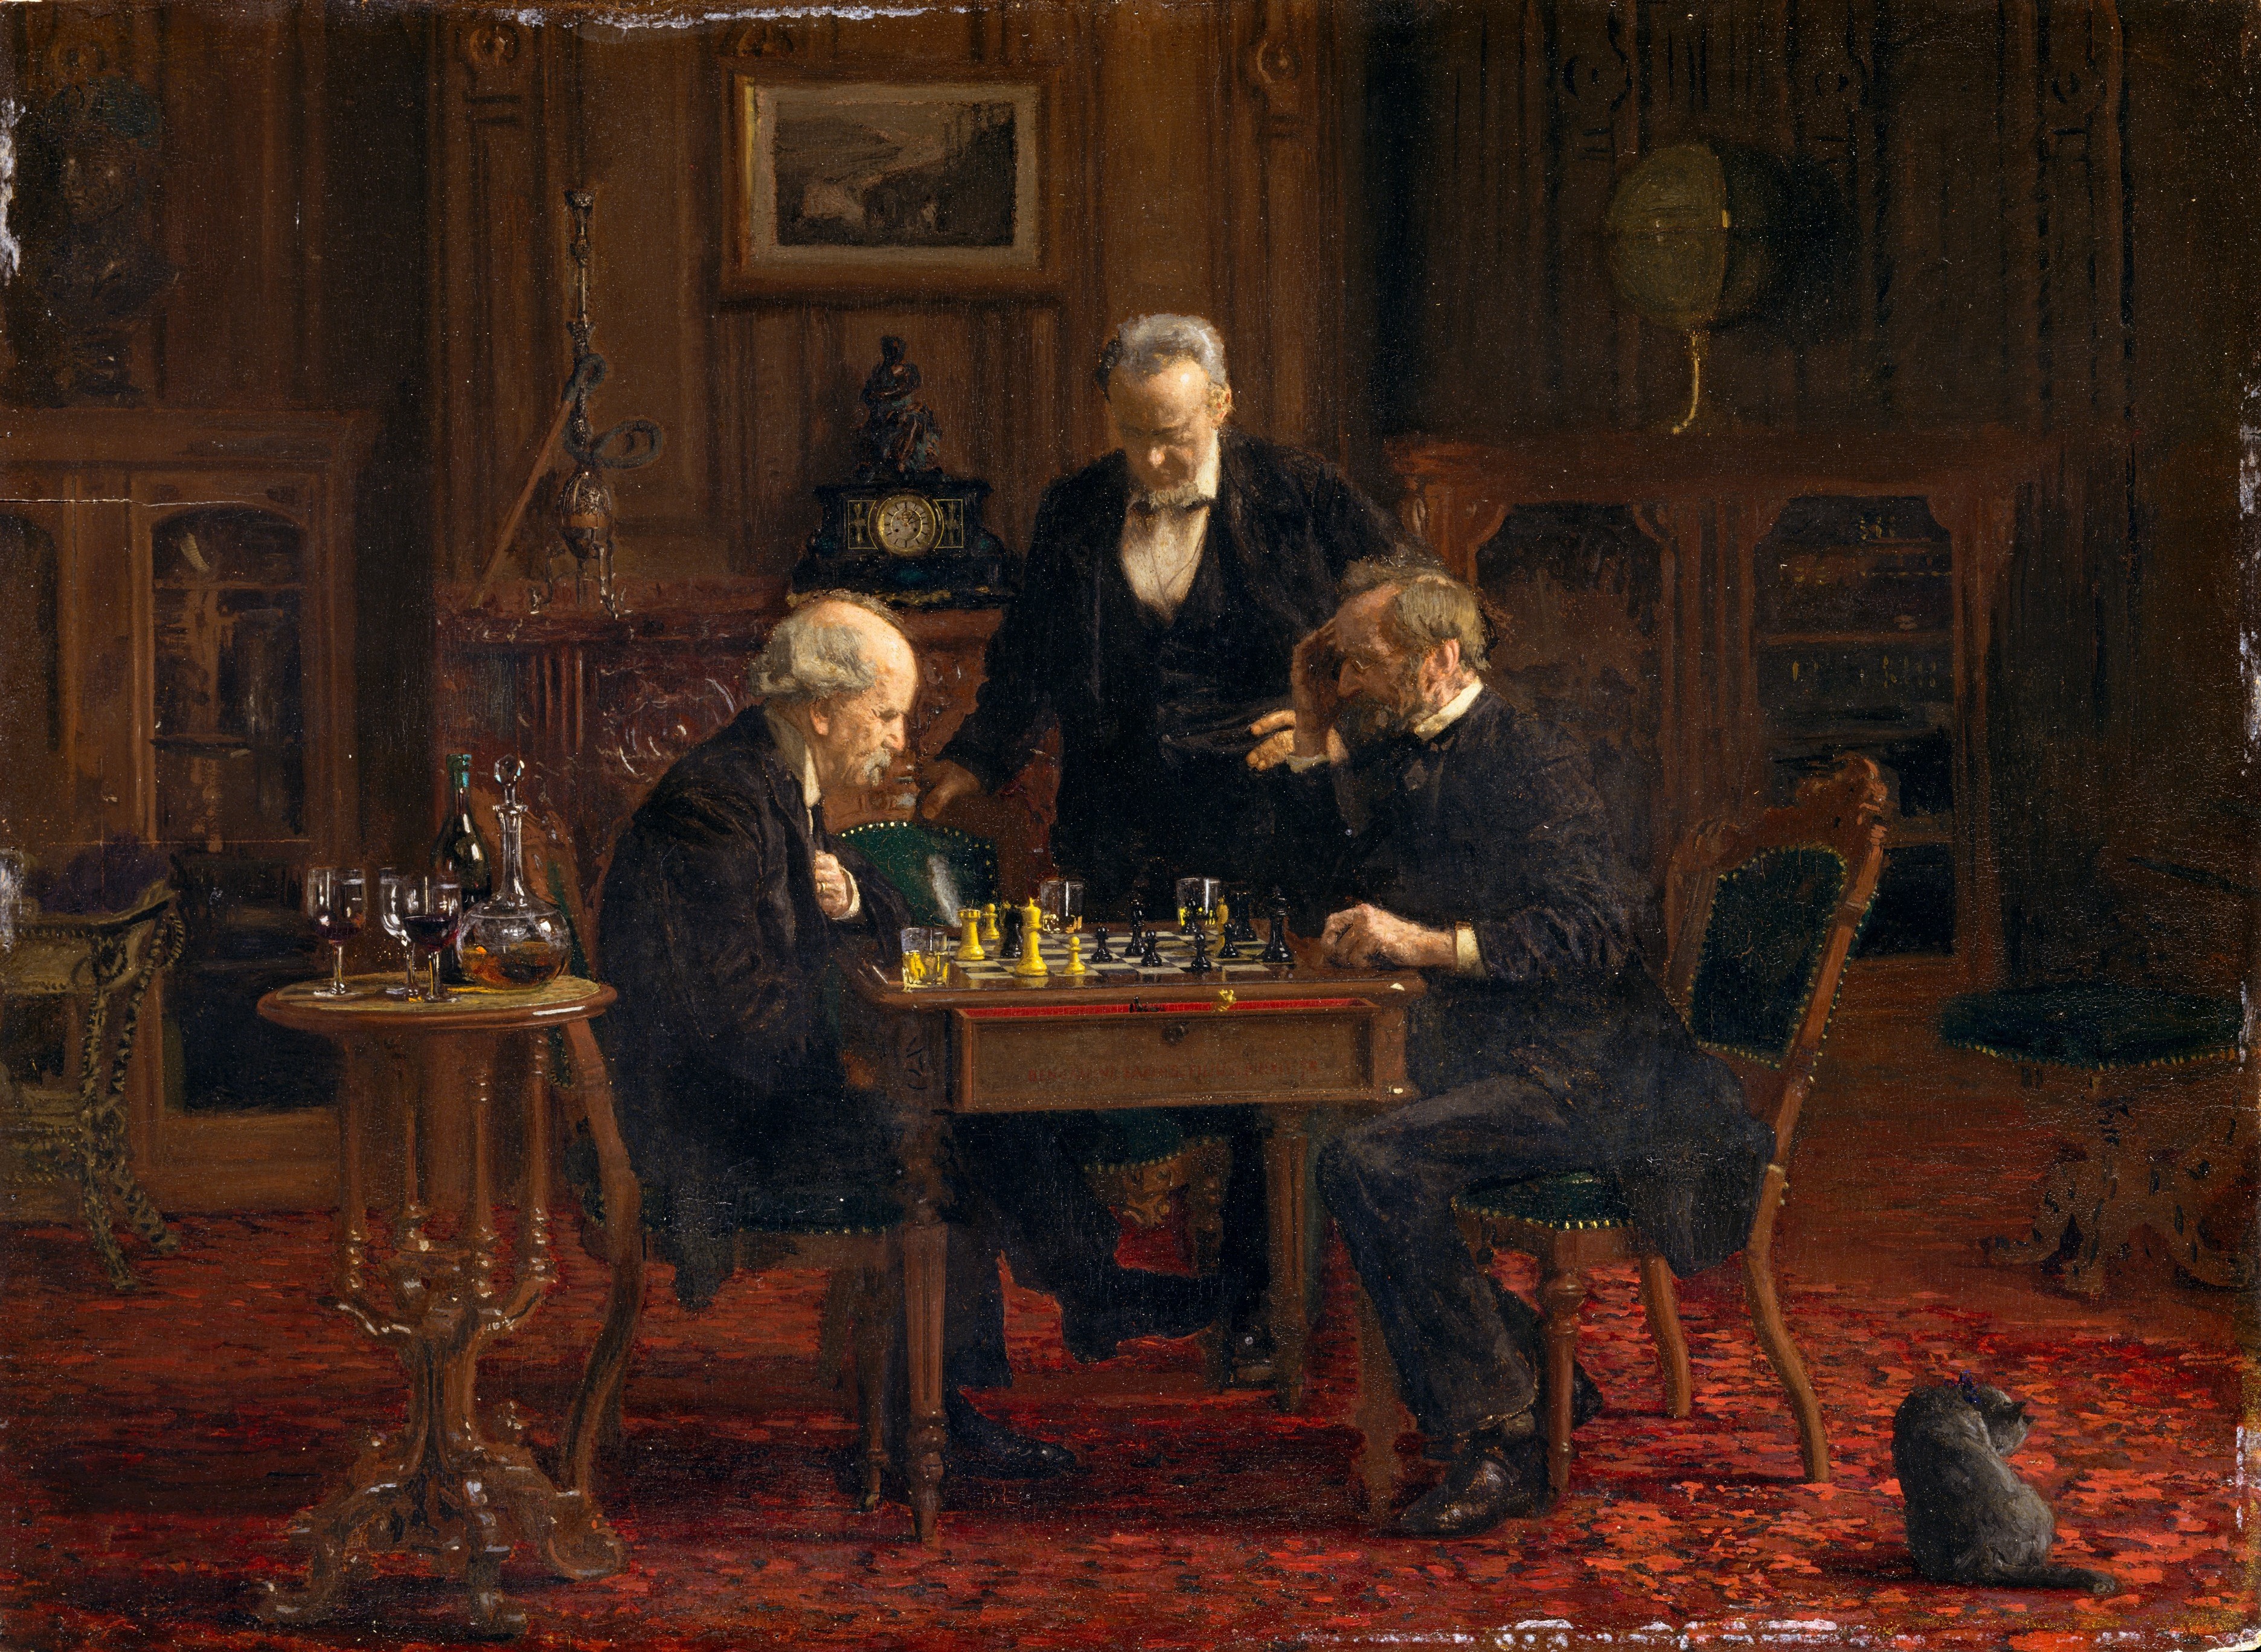 Thomas Eakins - The Chess Players